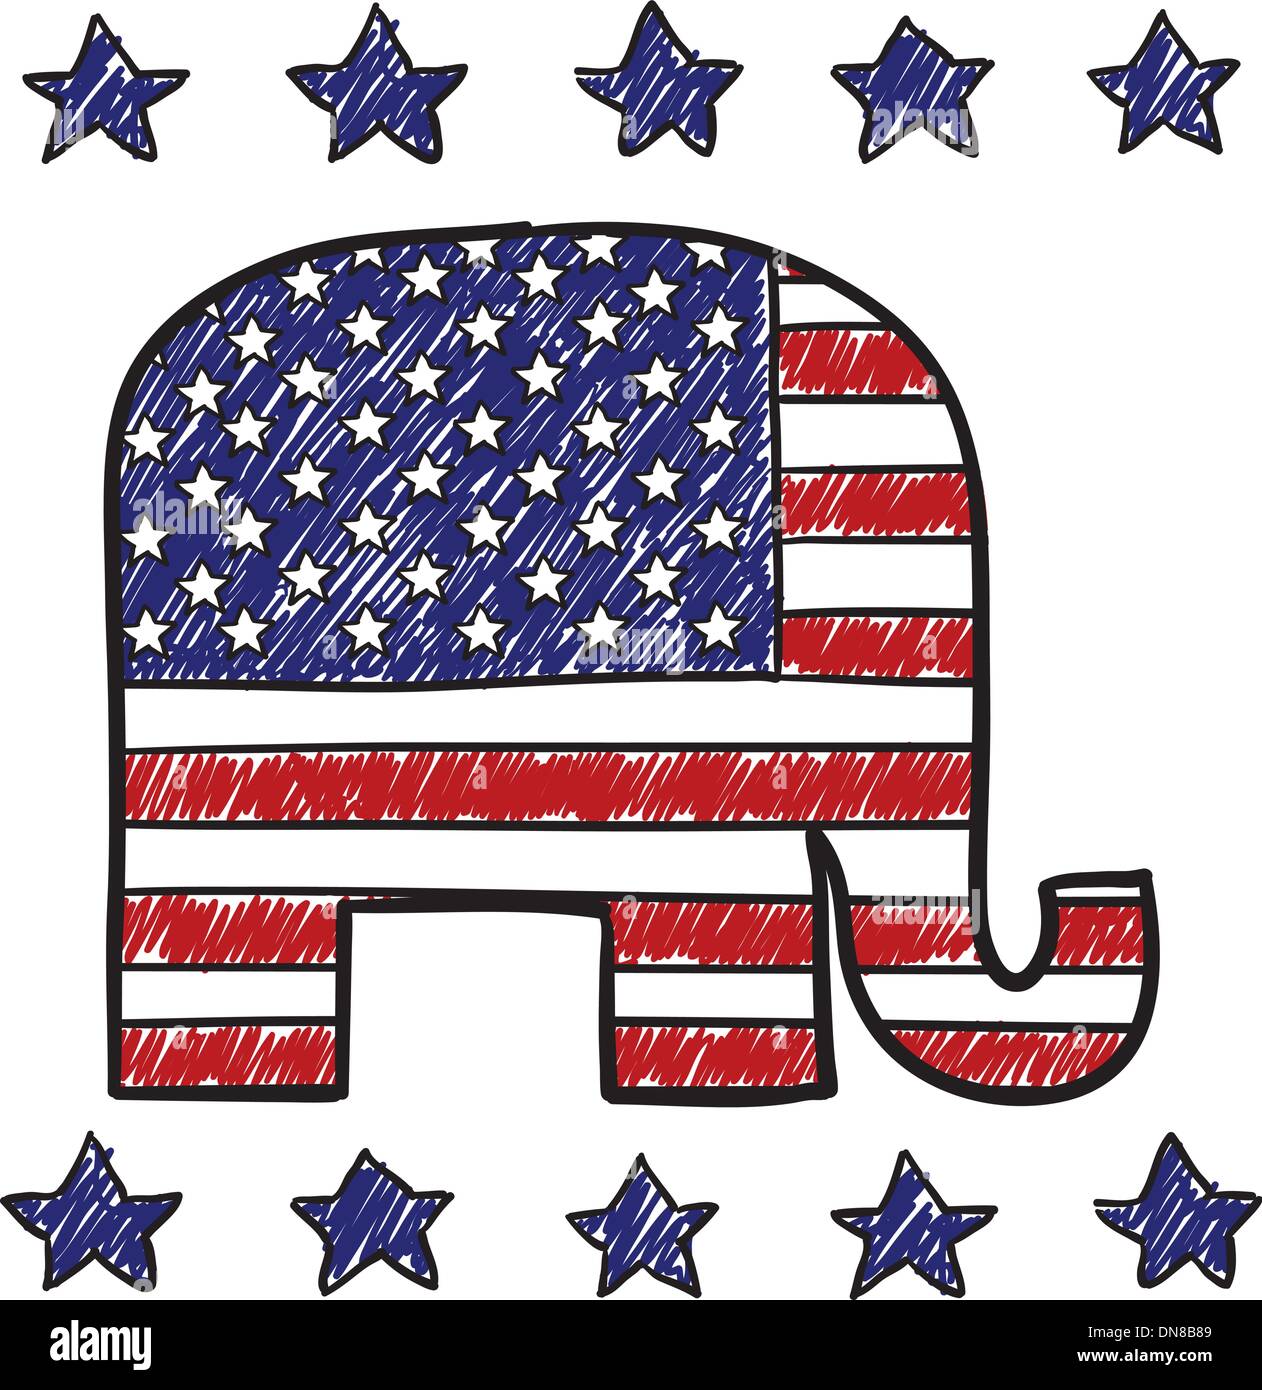 Republican party elephant insignia sketch Stock Vector